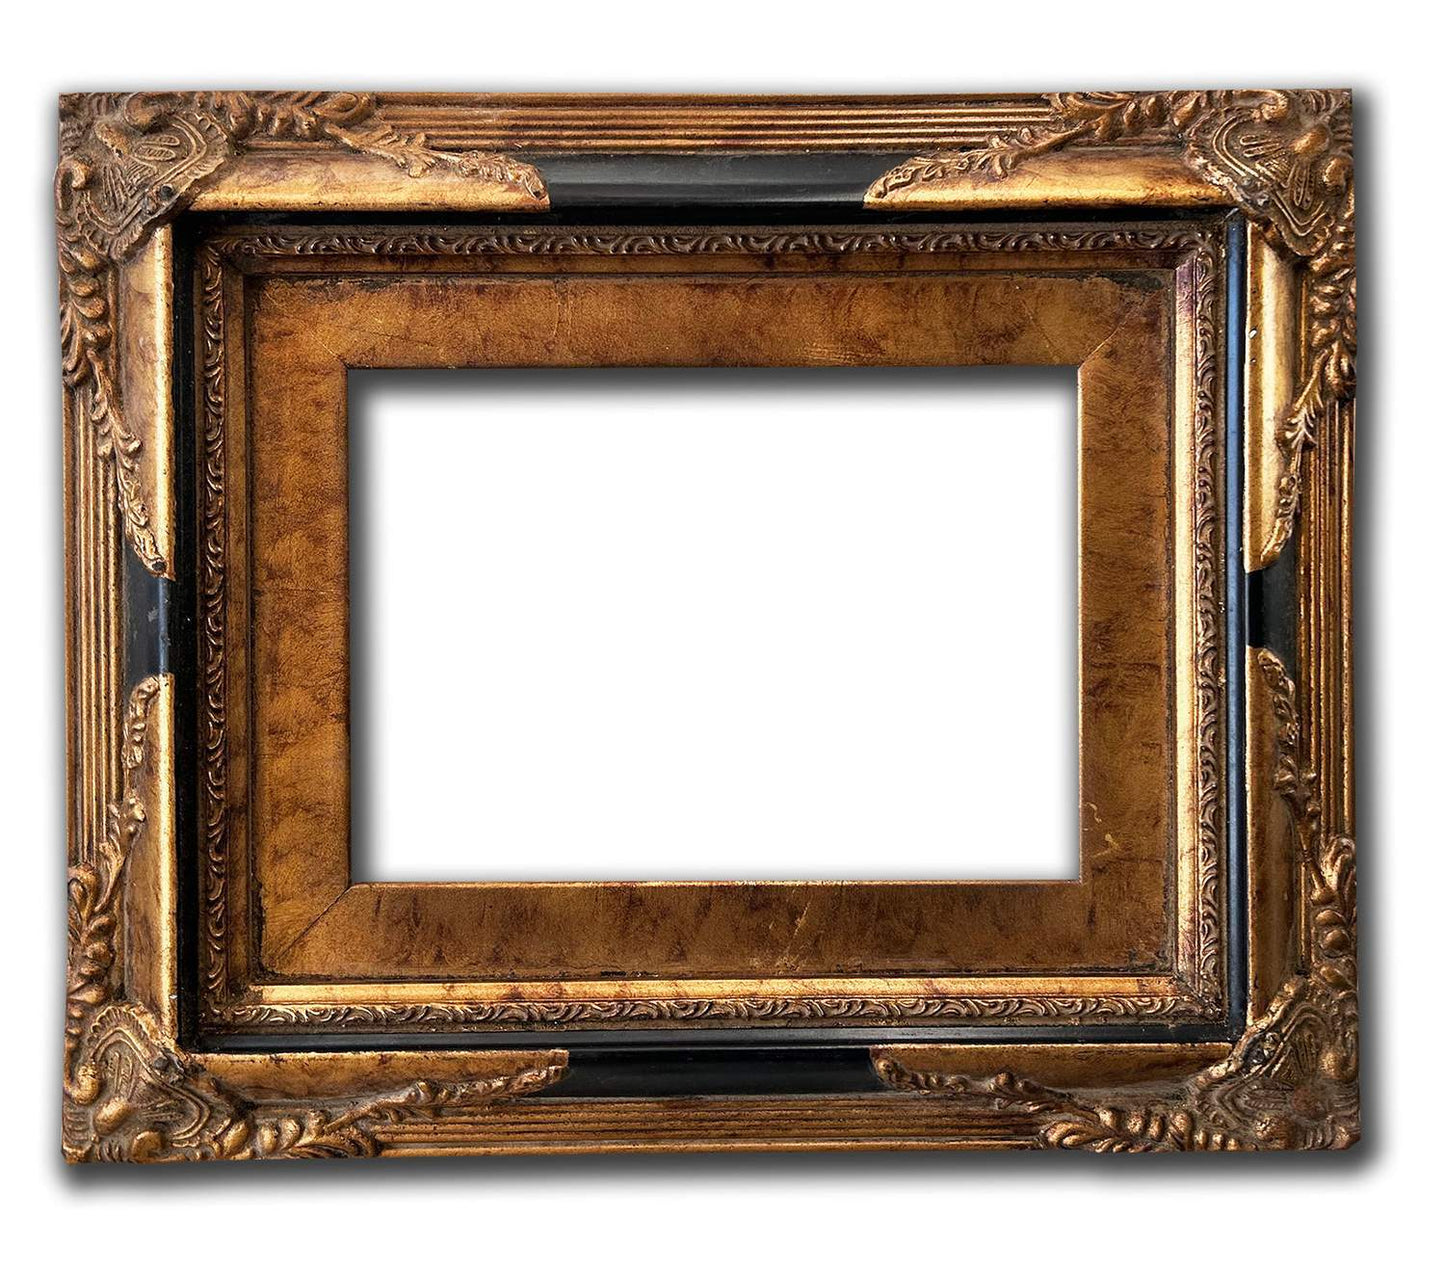 13x18 cm or 5x7 ins photo frame